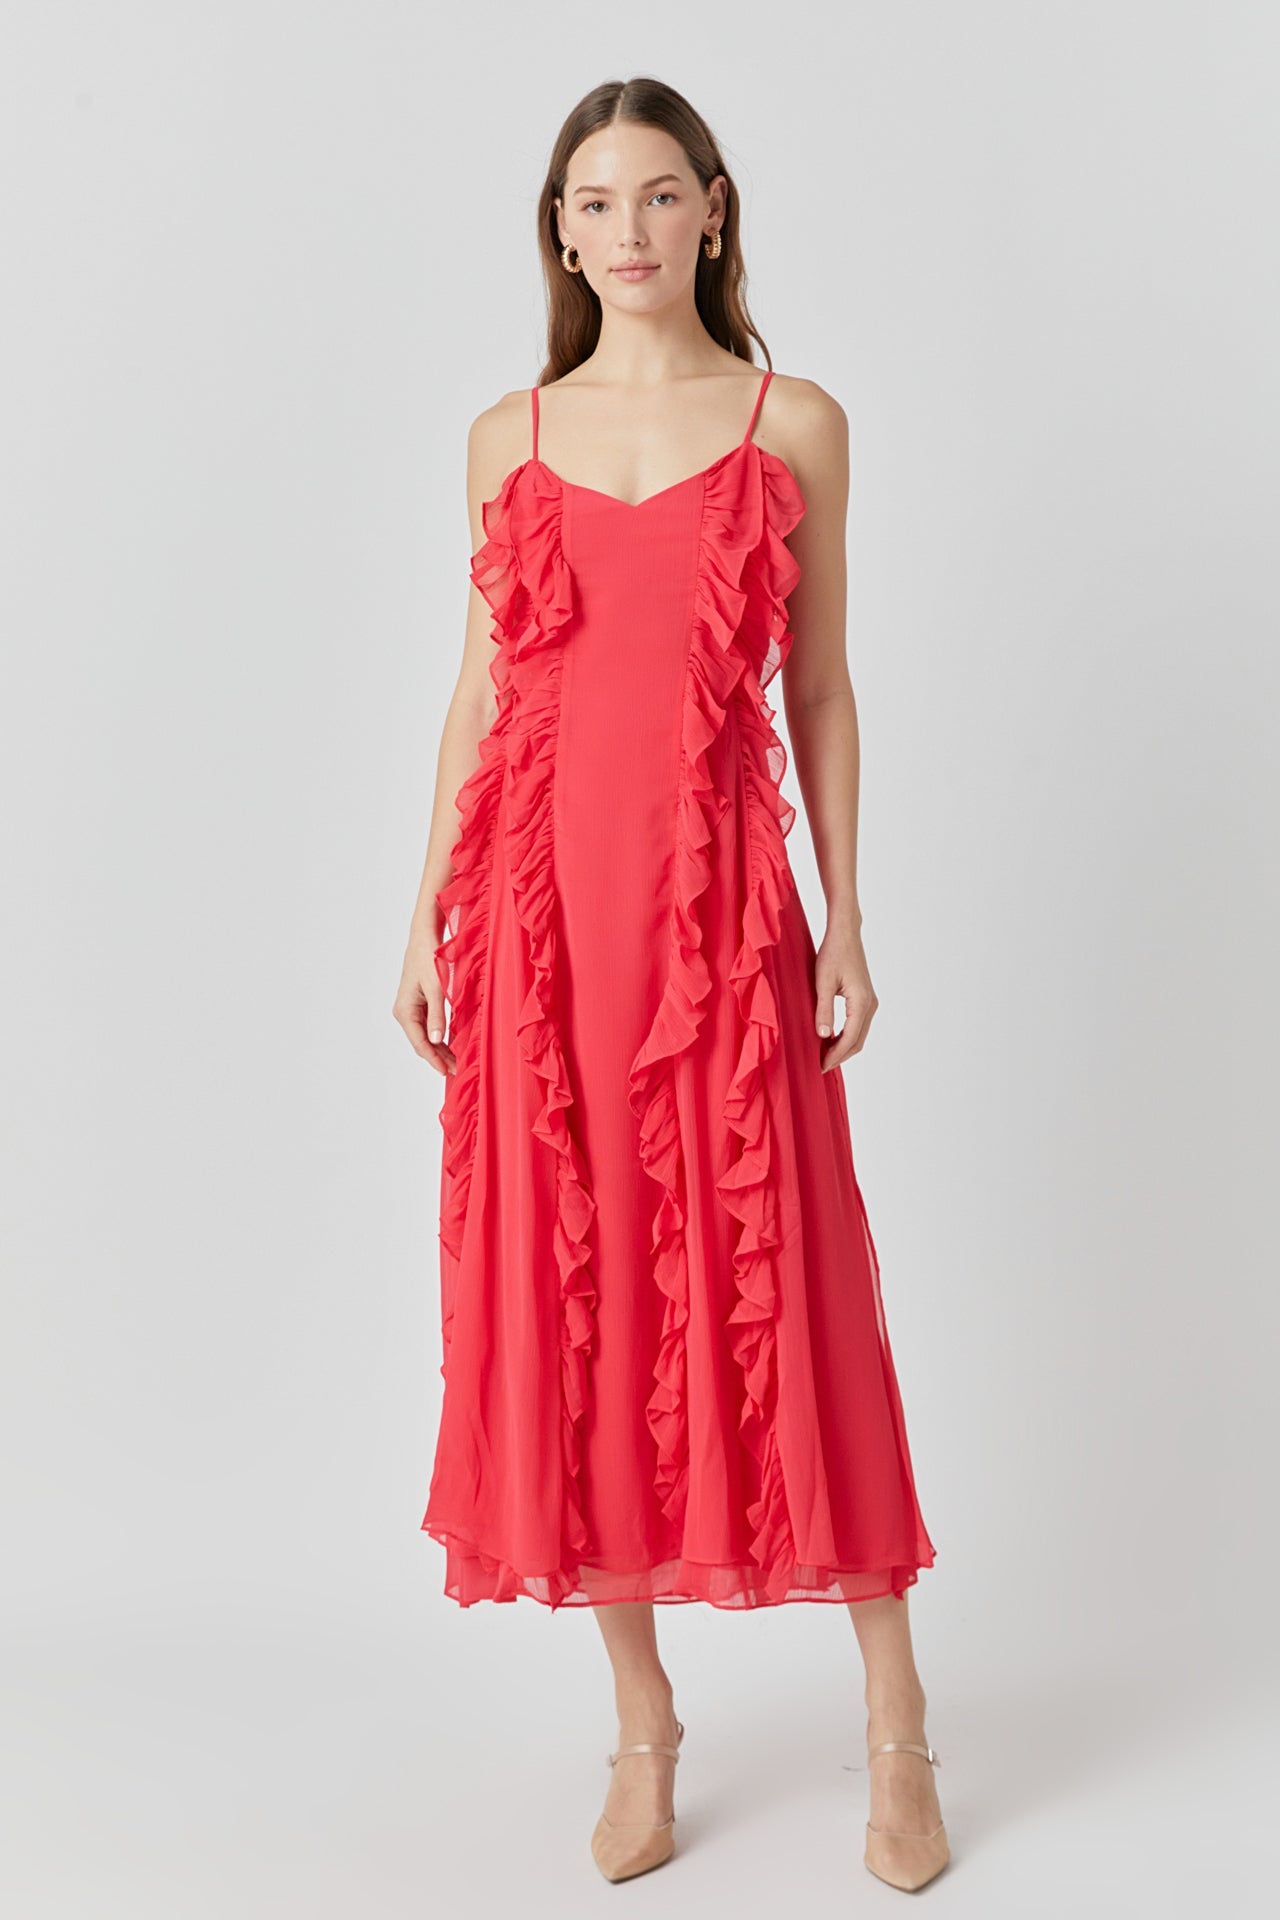 Endless Rose - Chiffon Ruffled Spaghetti Maxi Dress - Dresses in Women's Clothing available at endlessrose.com